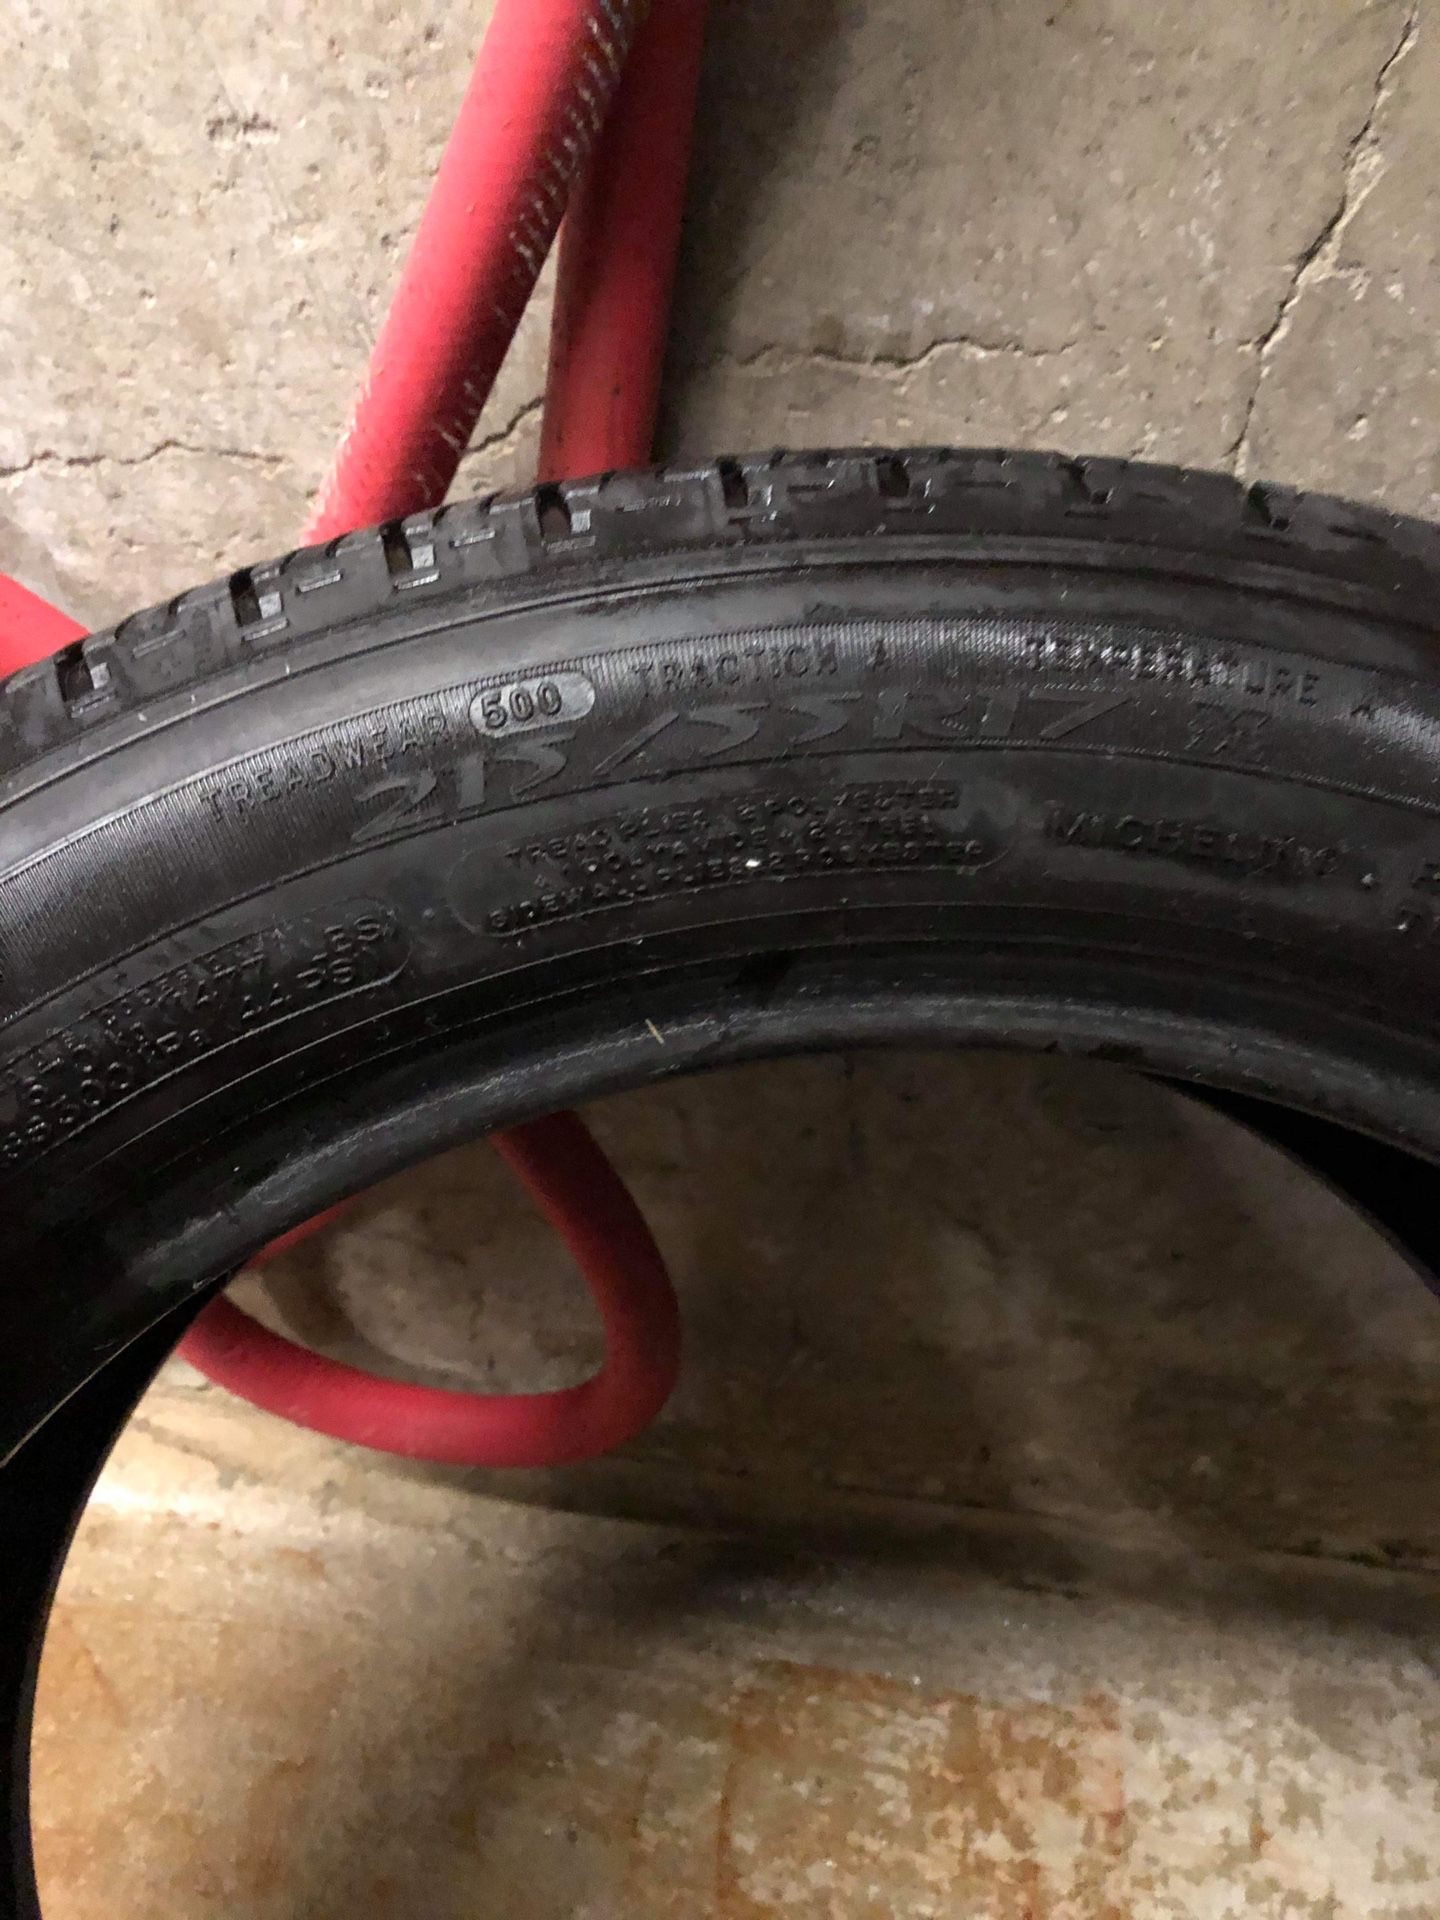 215/55-r17 Michelin tires